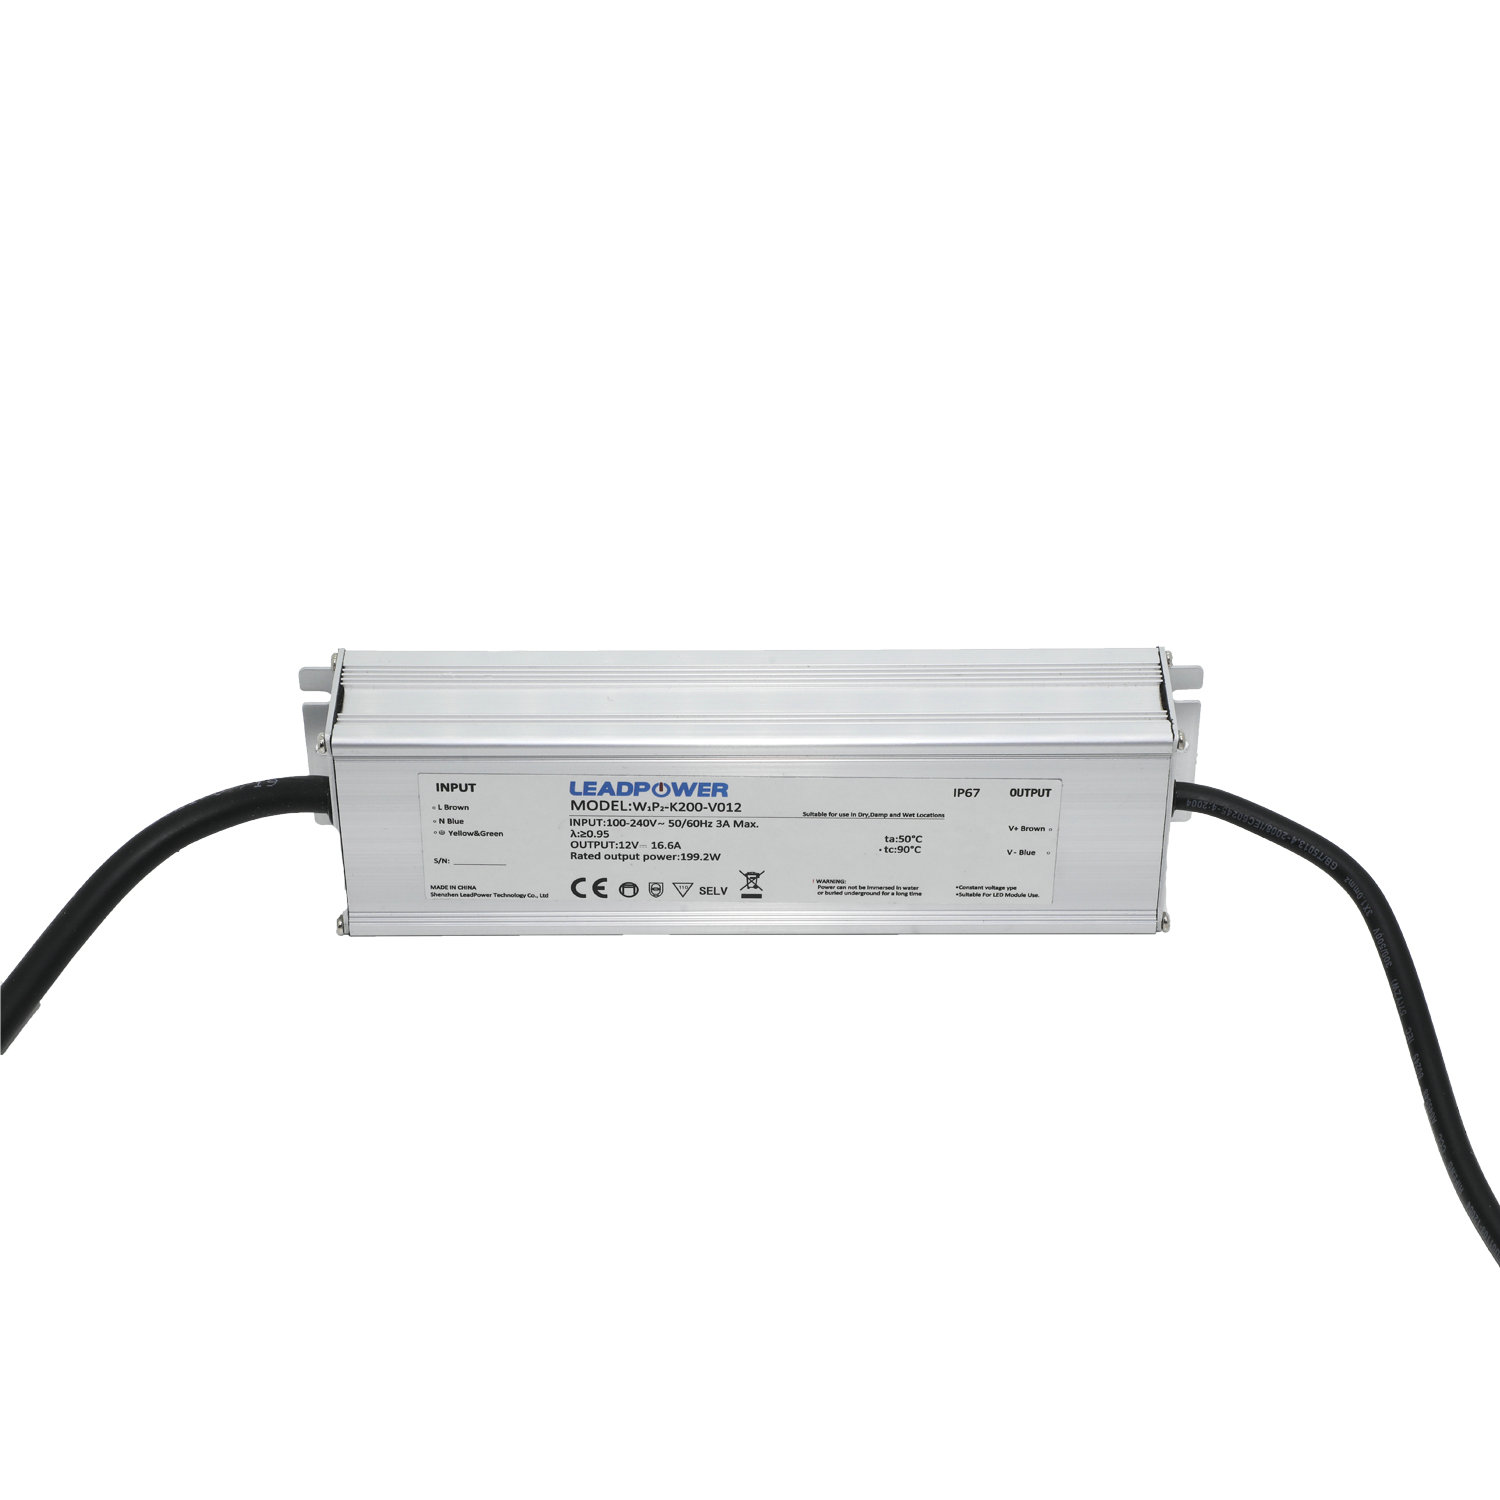 WAP-K200 Series Waterproof LED Power Supply